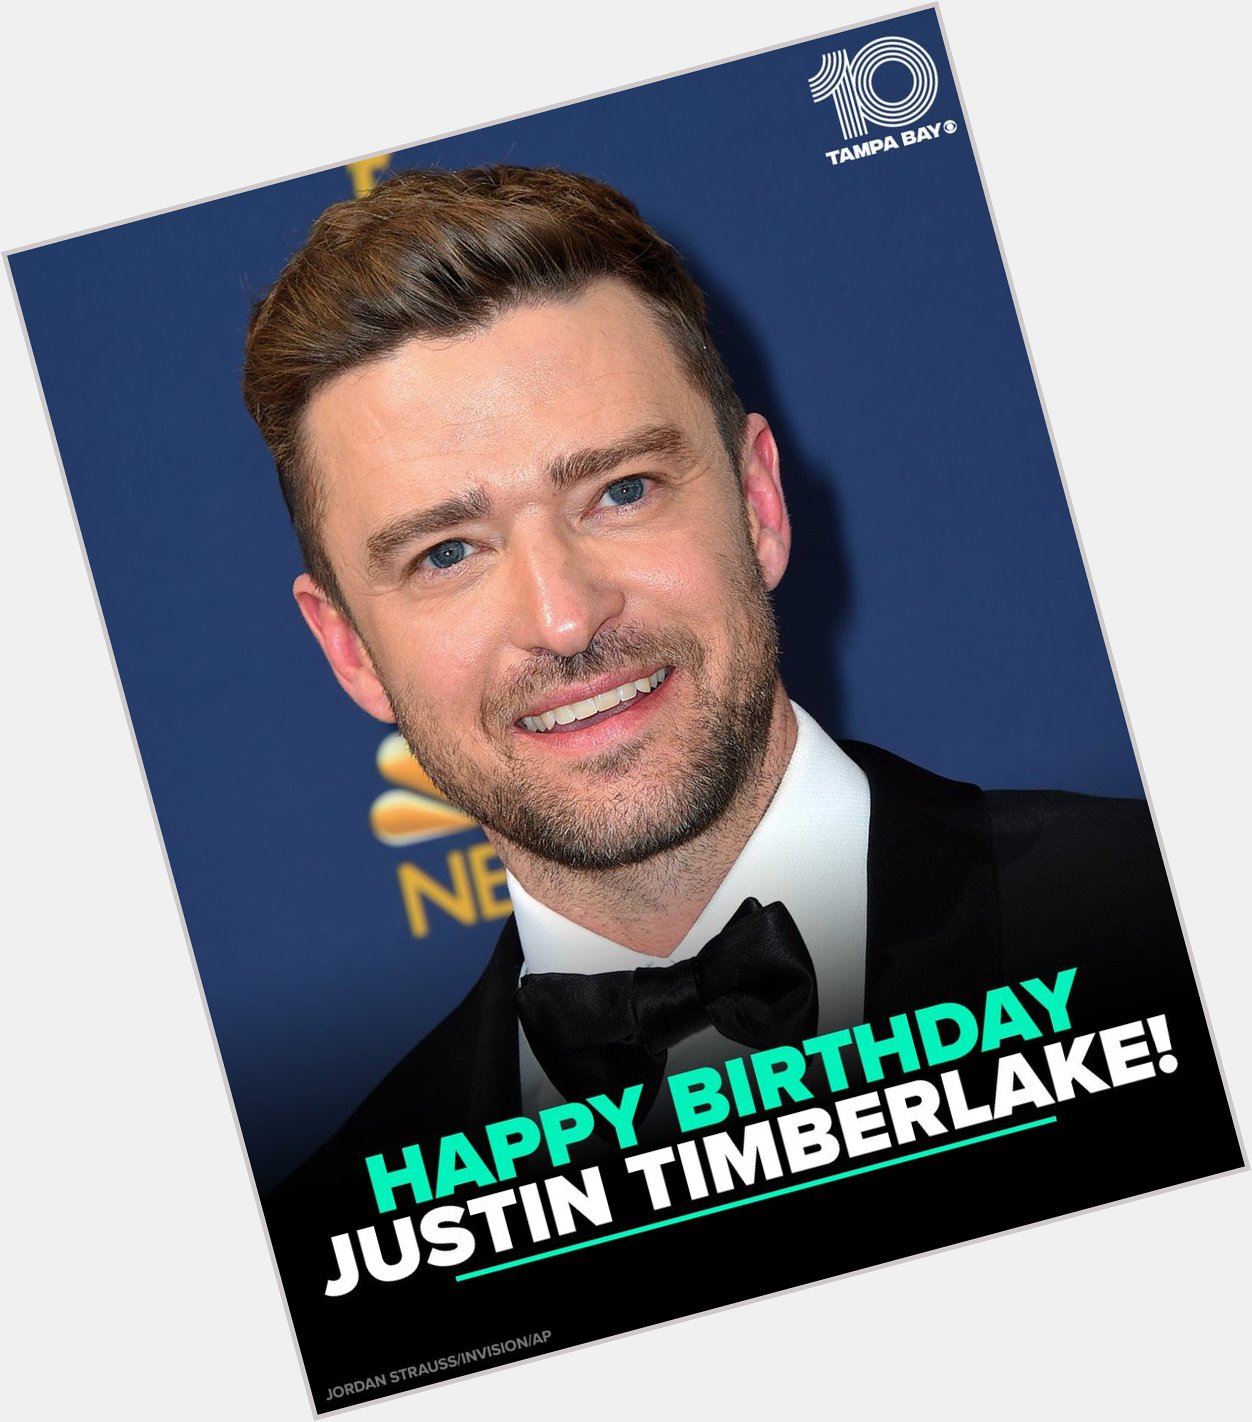 HAPPY BIRTHDAY! 10-time Grammy-winner Justin Timberlake is celebrating his 41st birthday today! 